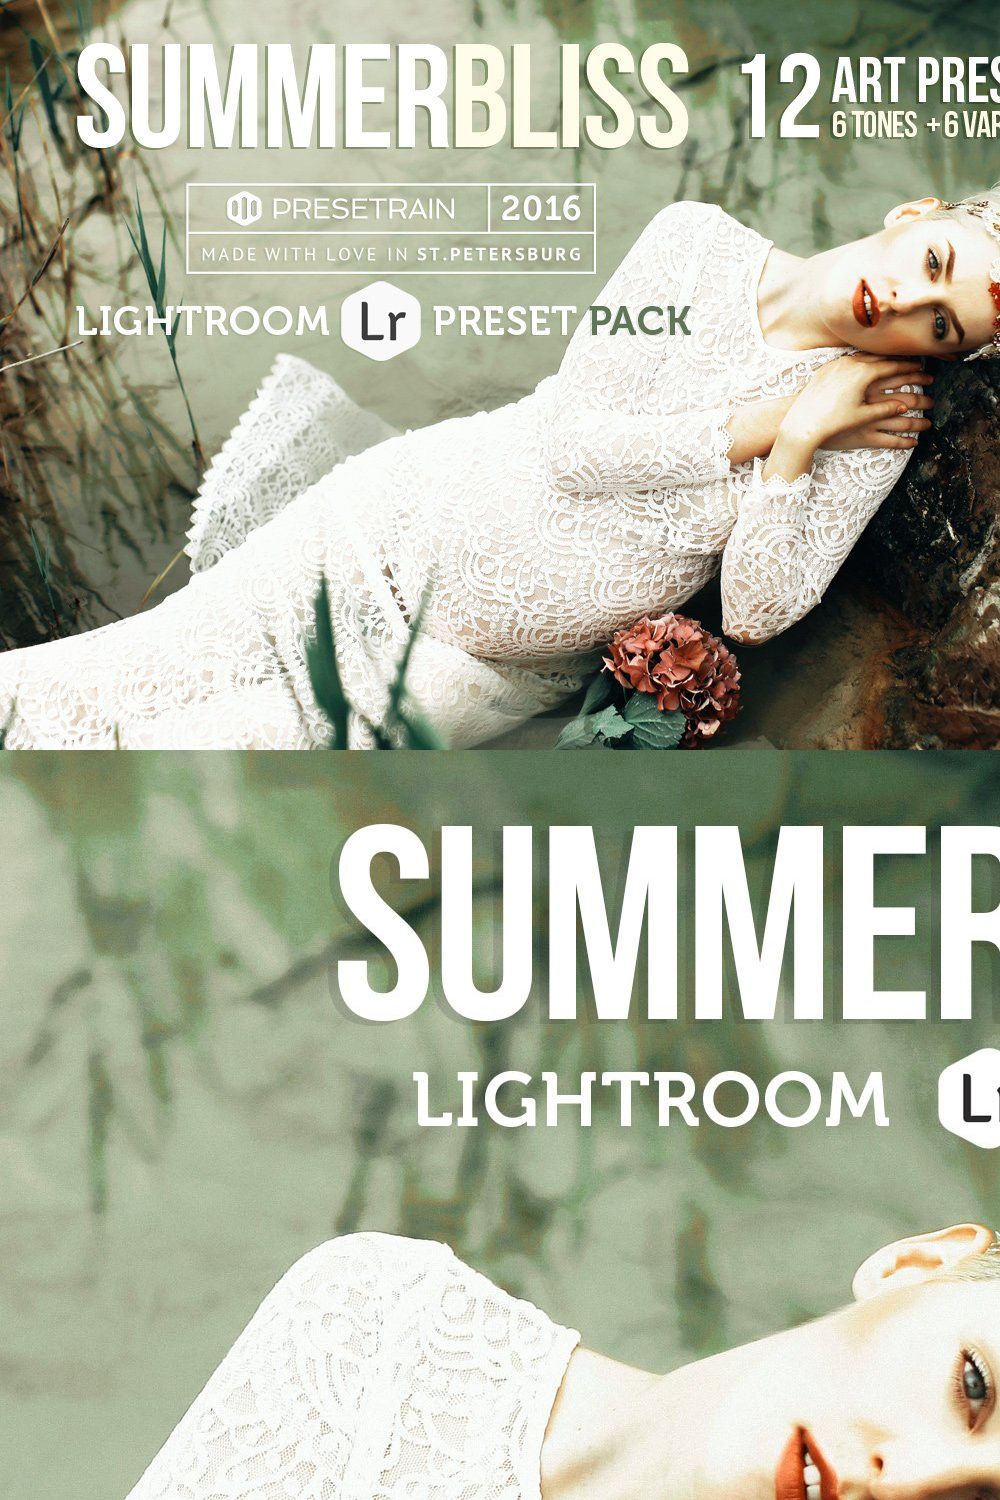 Summerbliss Lightroom Preset Pack pinterest preview image.